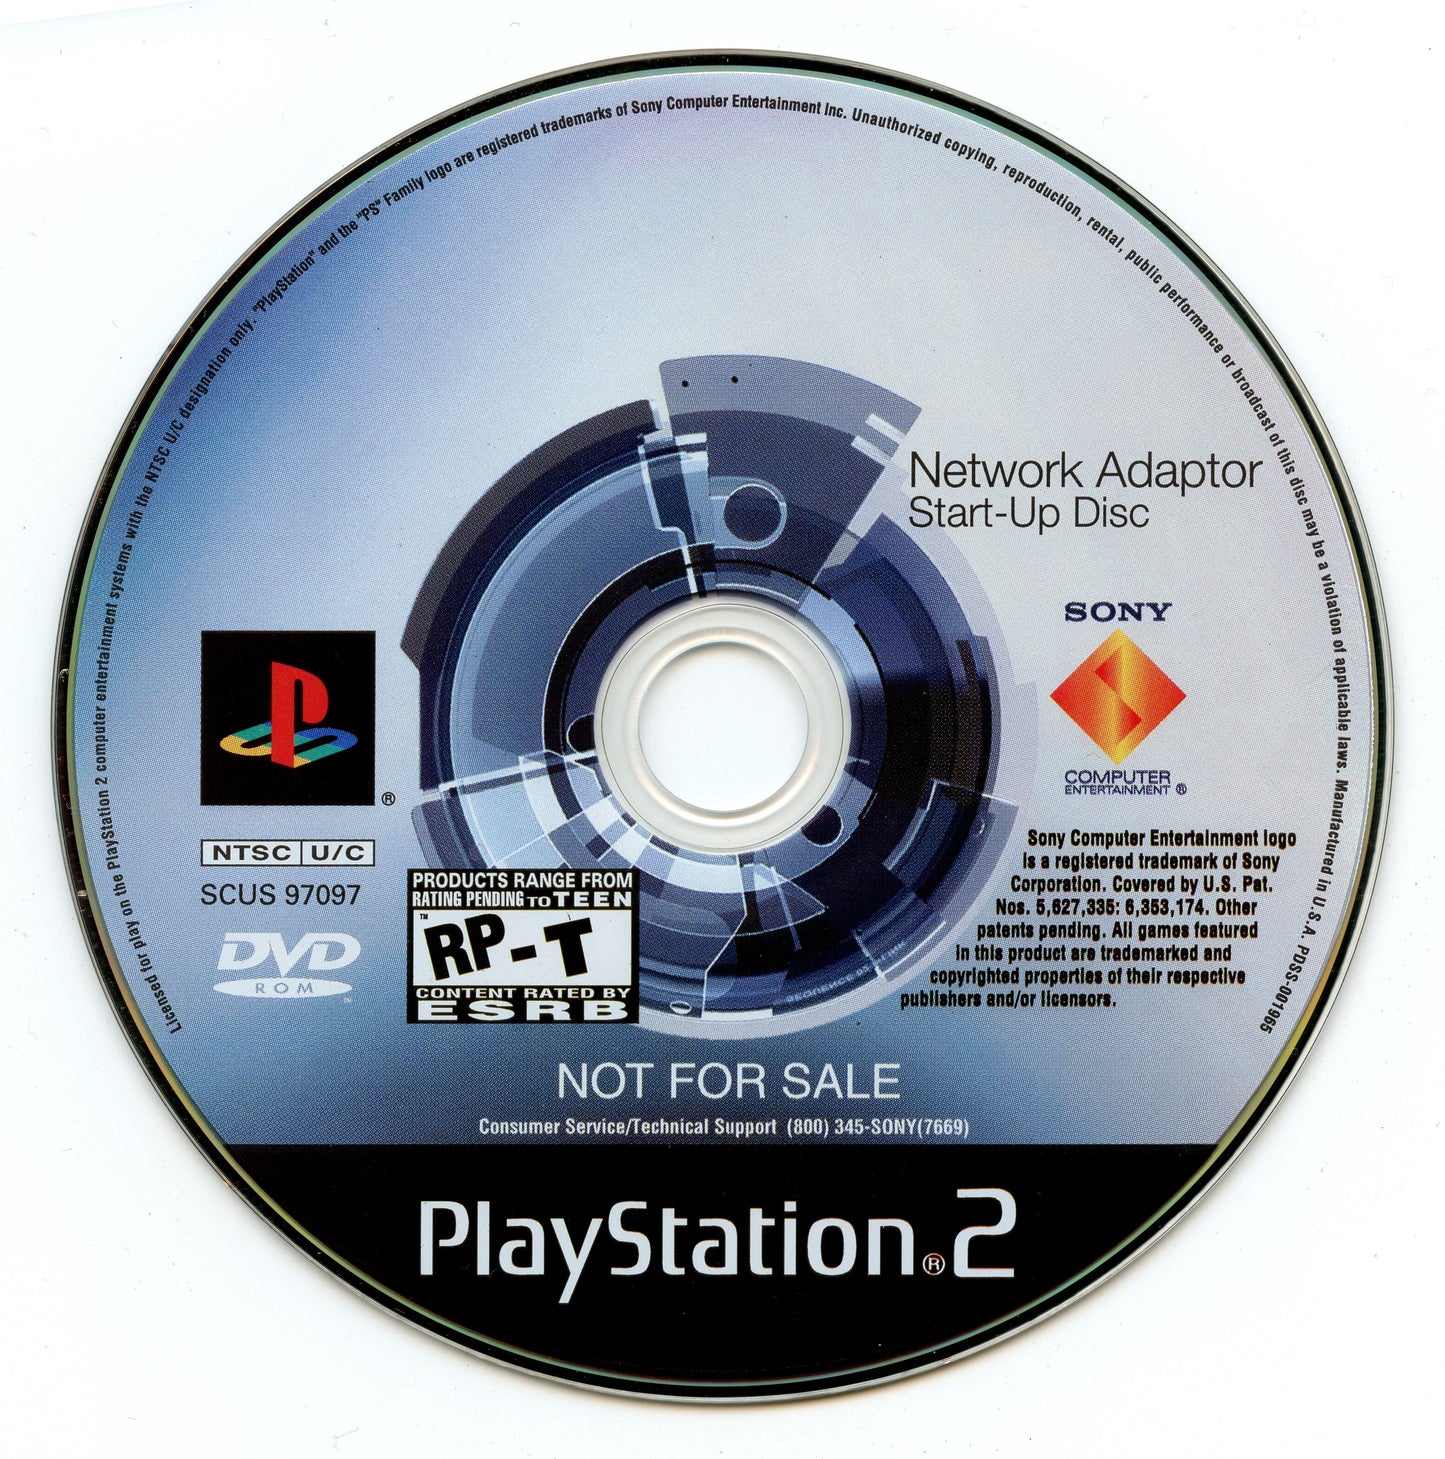 Network Adaptor Start-Up Disc (PS2)